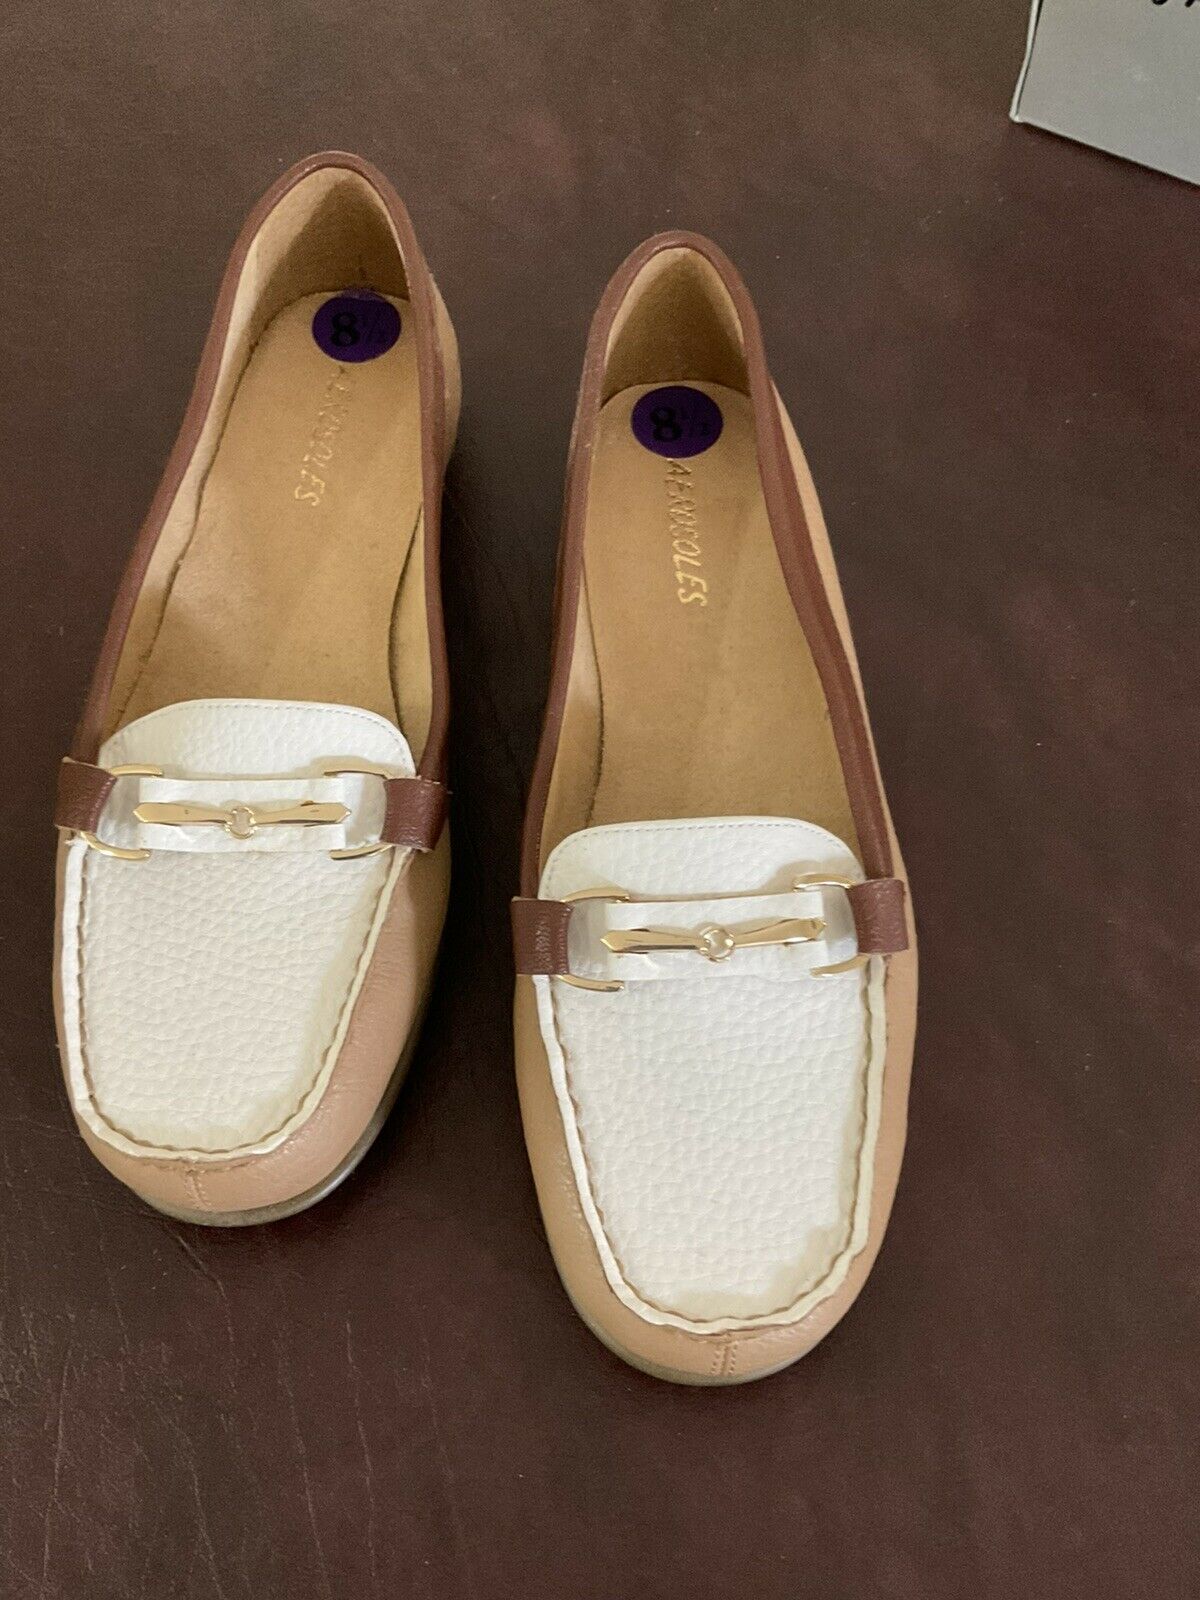 AEROSOLES COMFORT LOAFERS SLIP ON Shoes Women's 8 .5 M / New